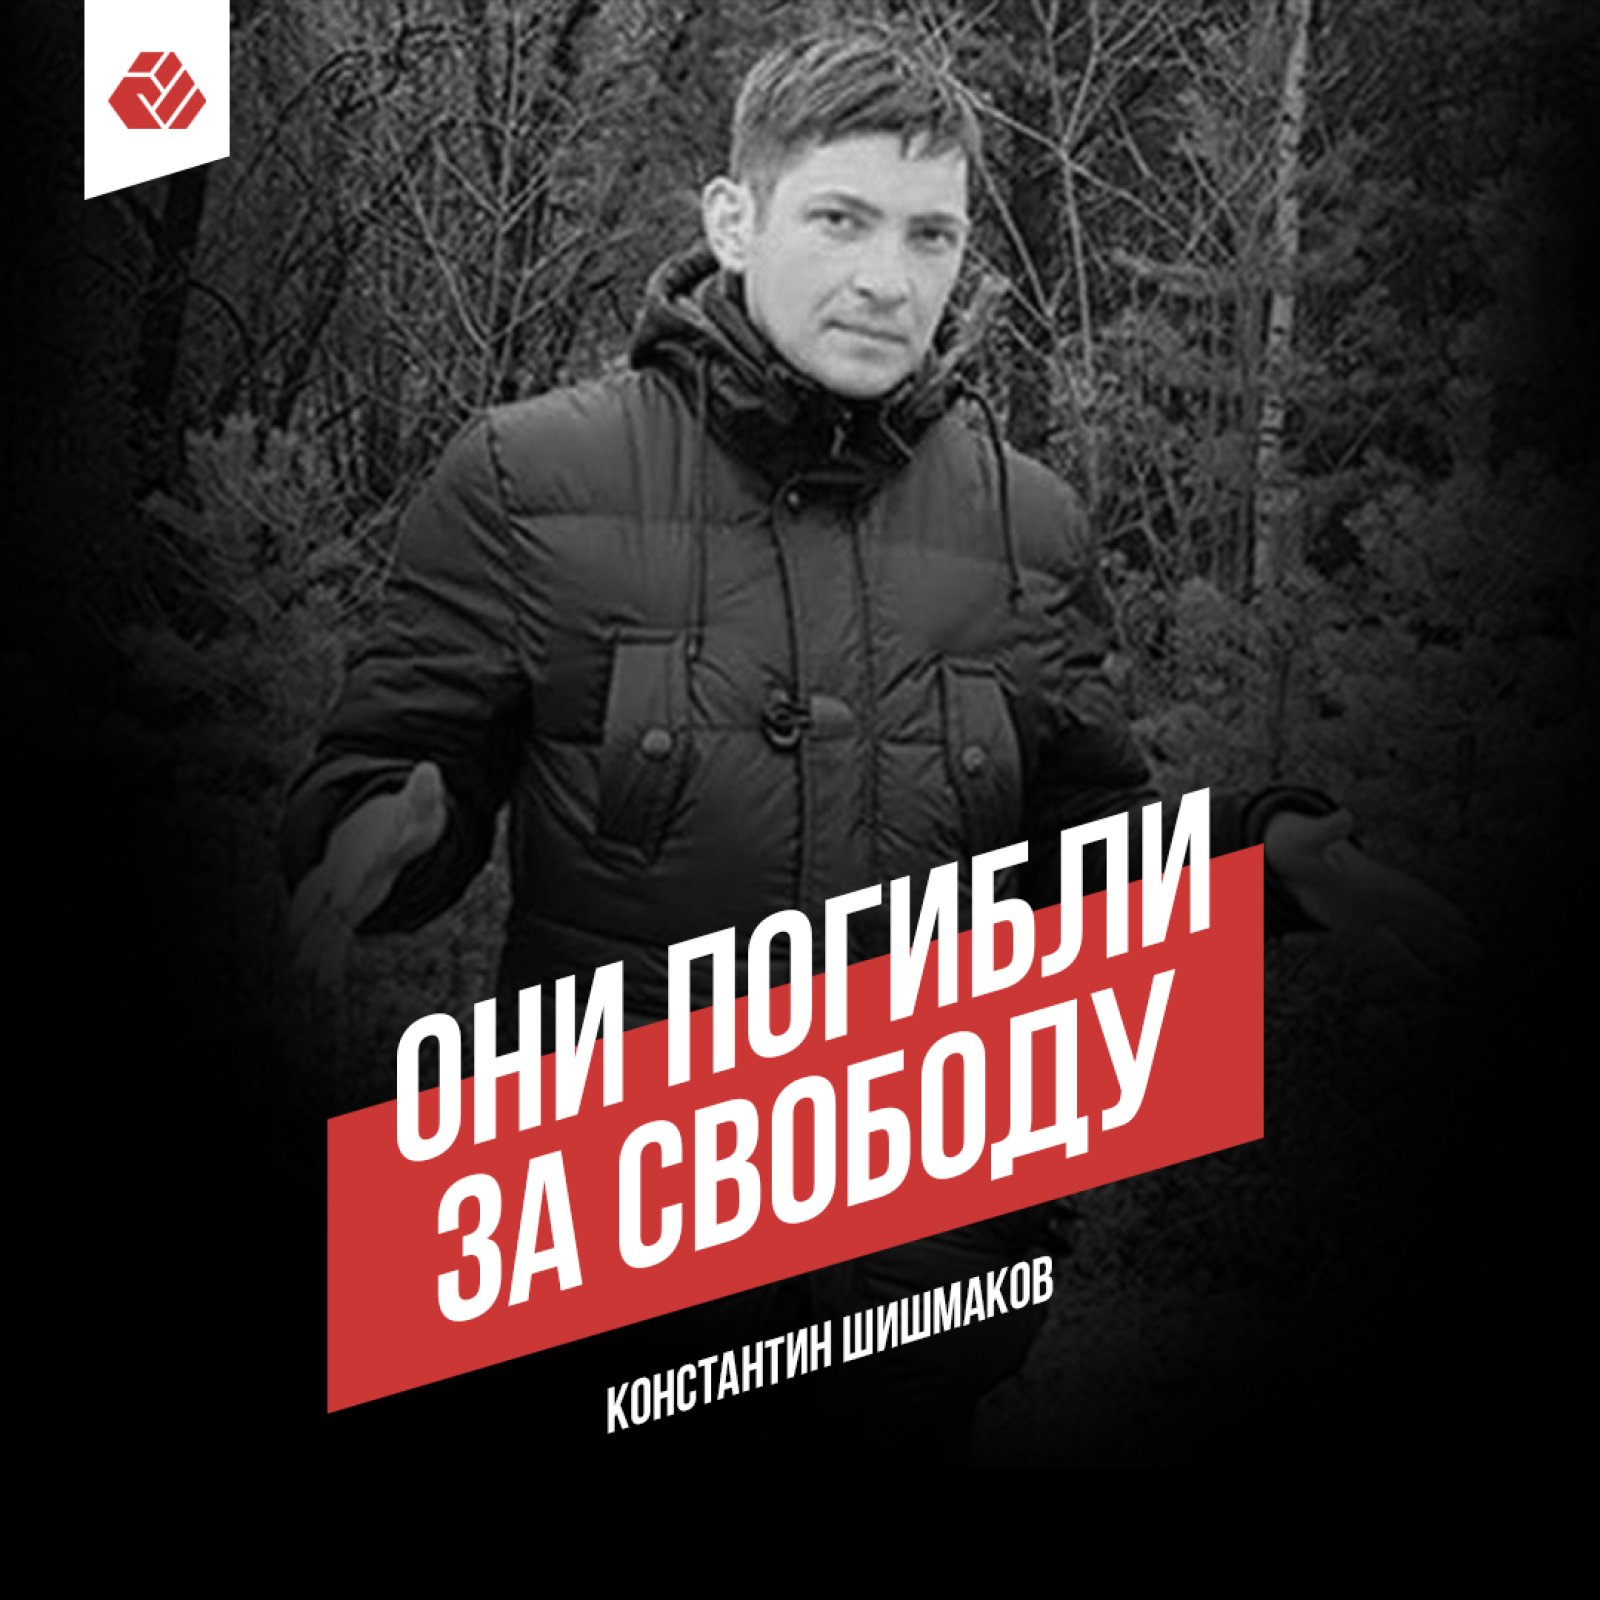 Константин Шишмаков - шестая жертва августа 2020